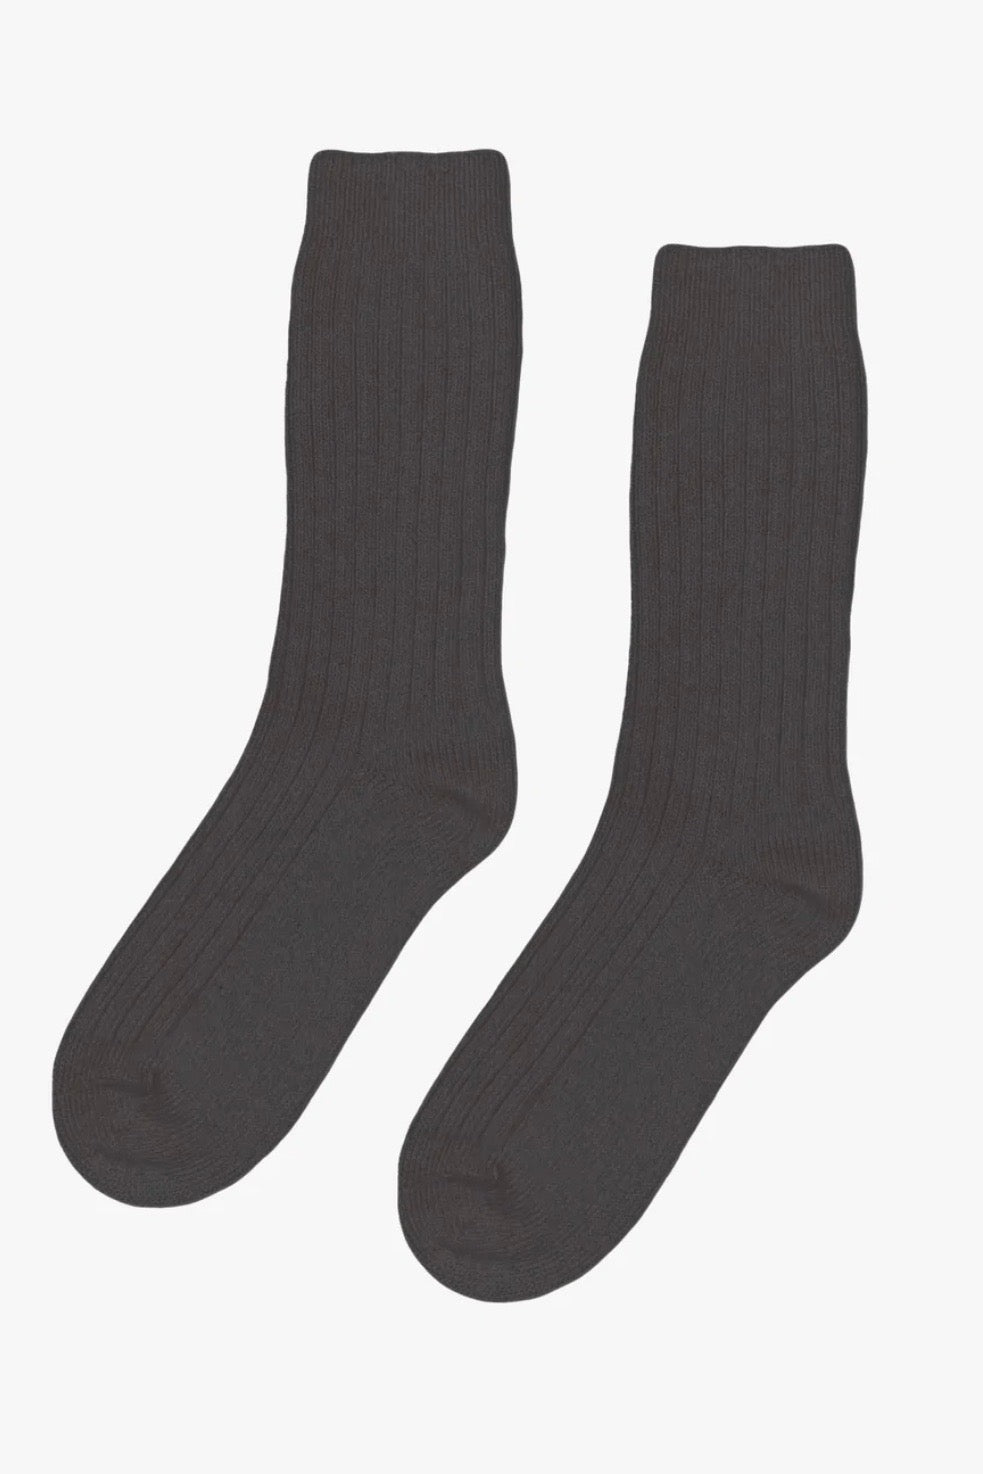 MERINO WOOL BLEND Socks 41-46